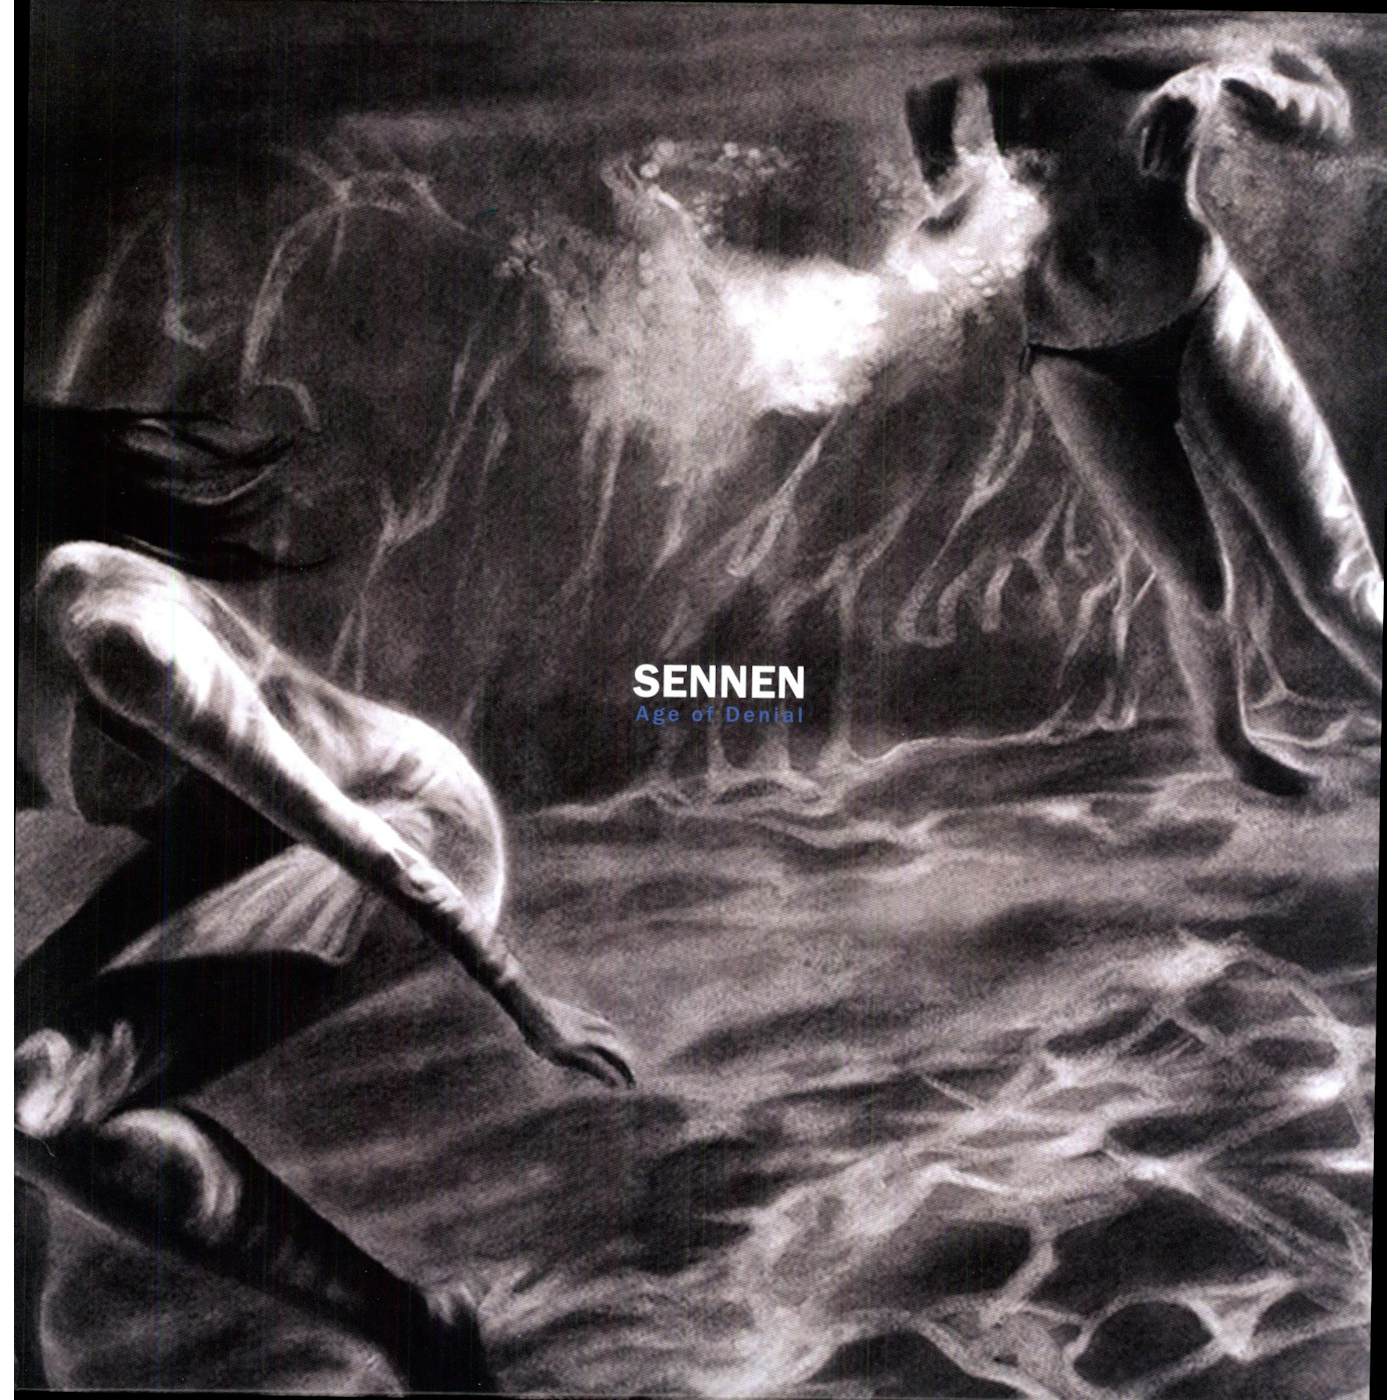 Sennen Age of Denial Vinyl Record